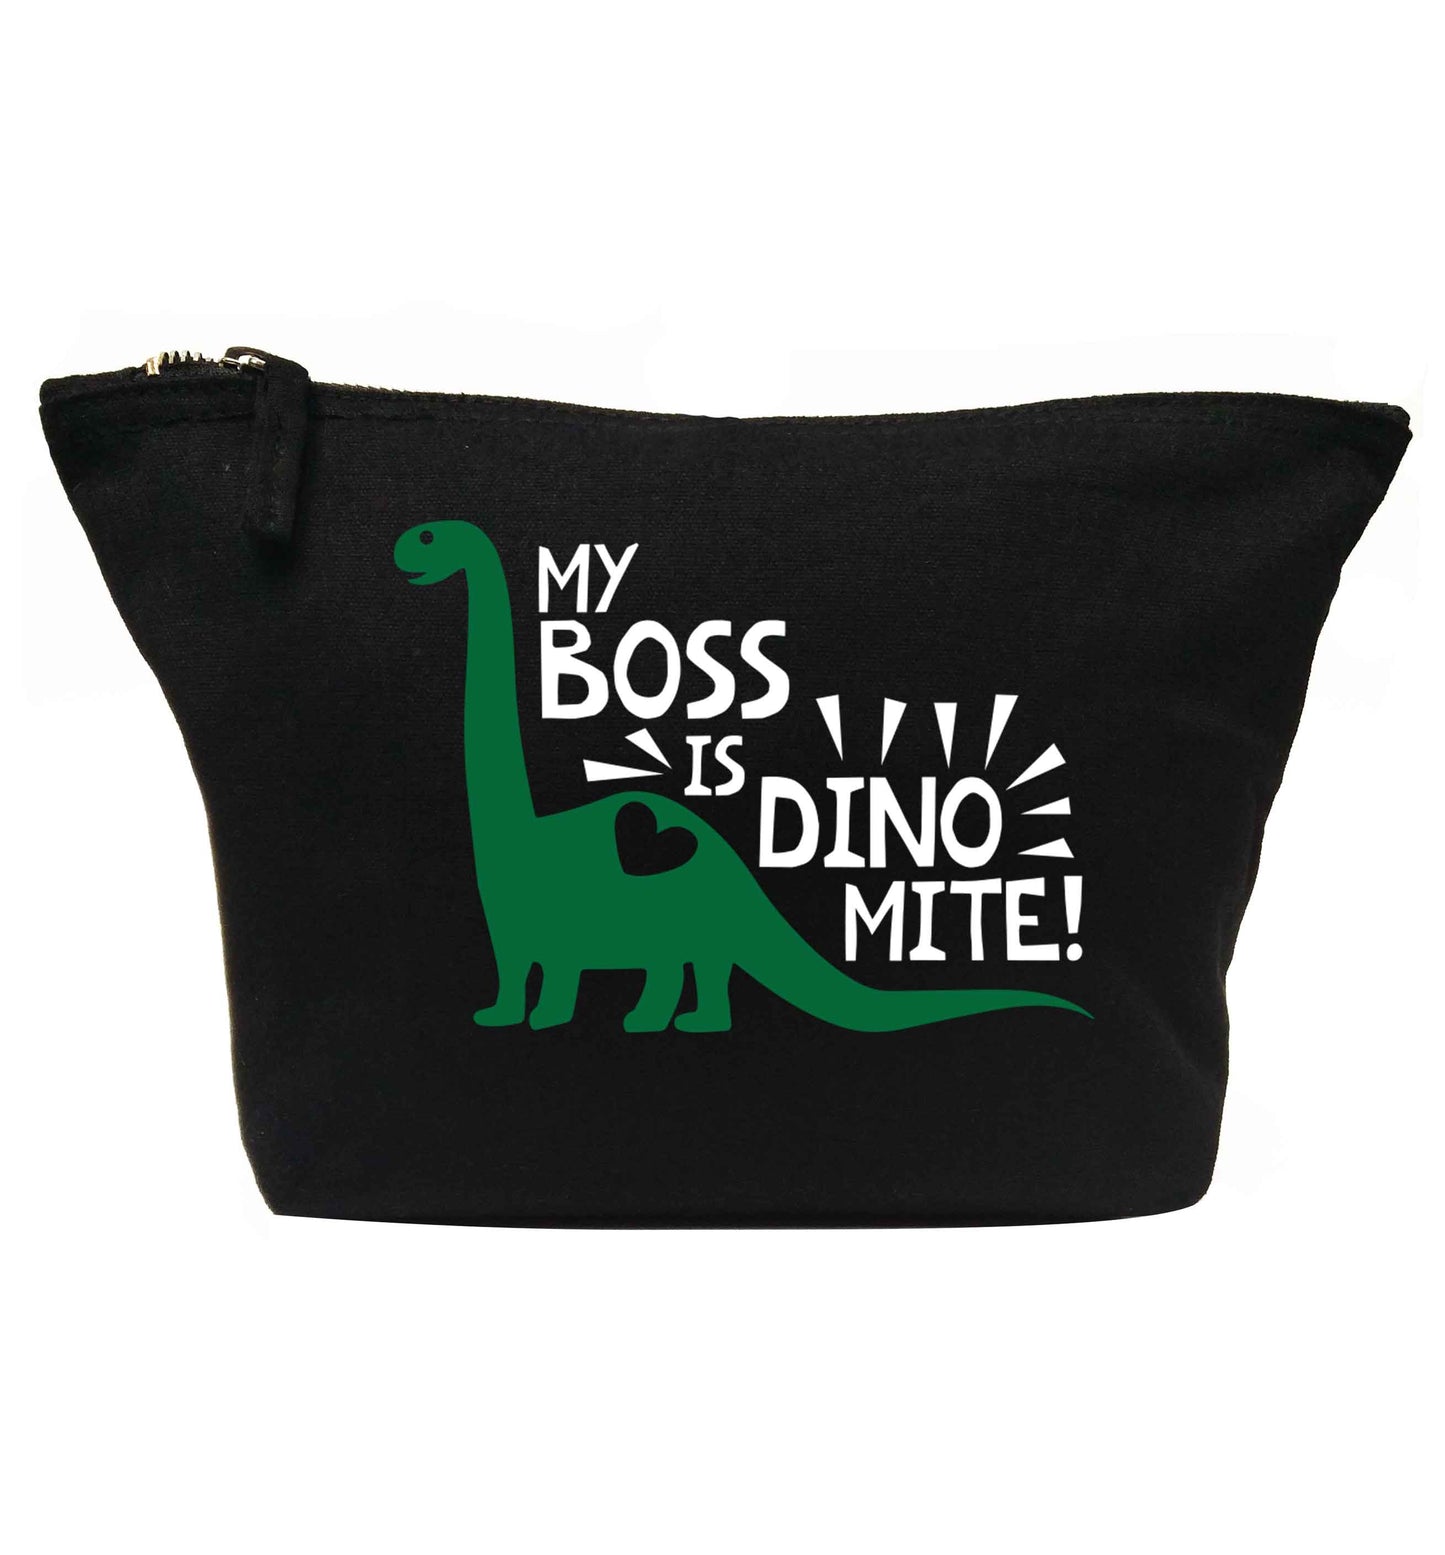 My boss is dinomite! | makeup / wash bag